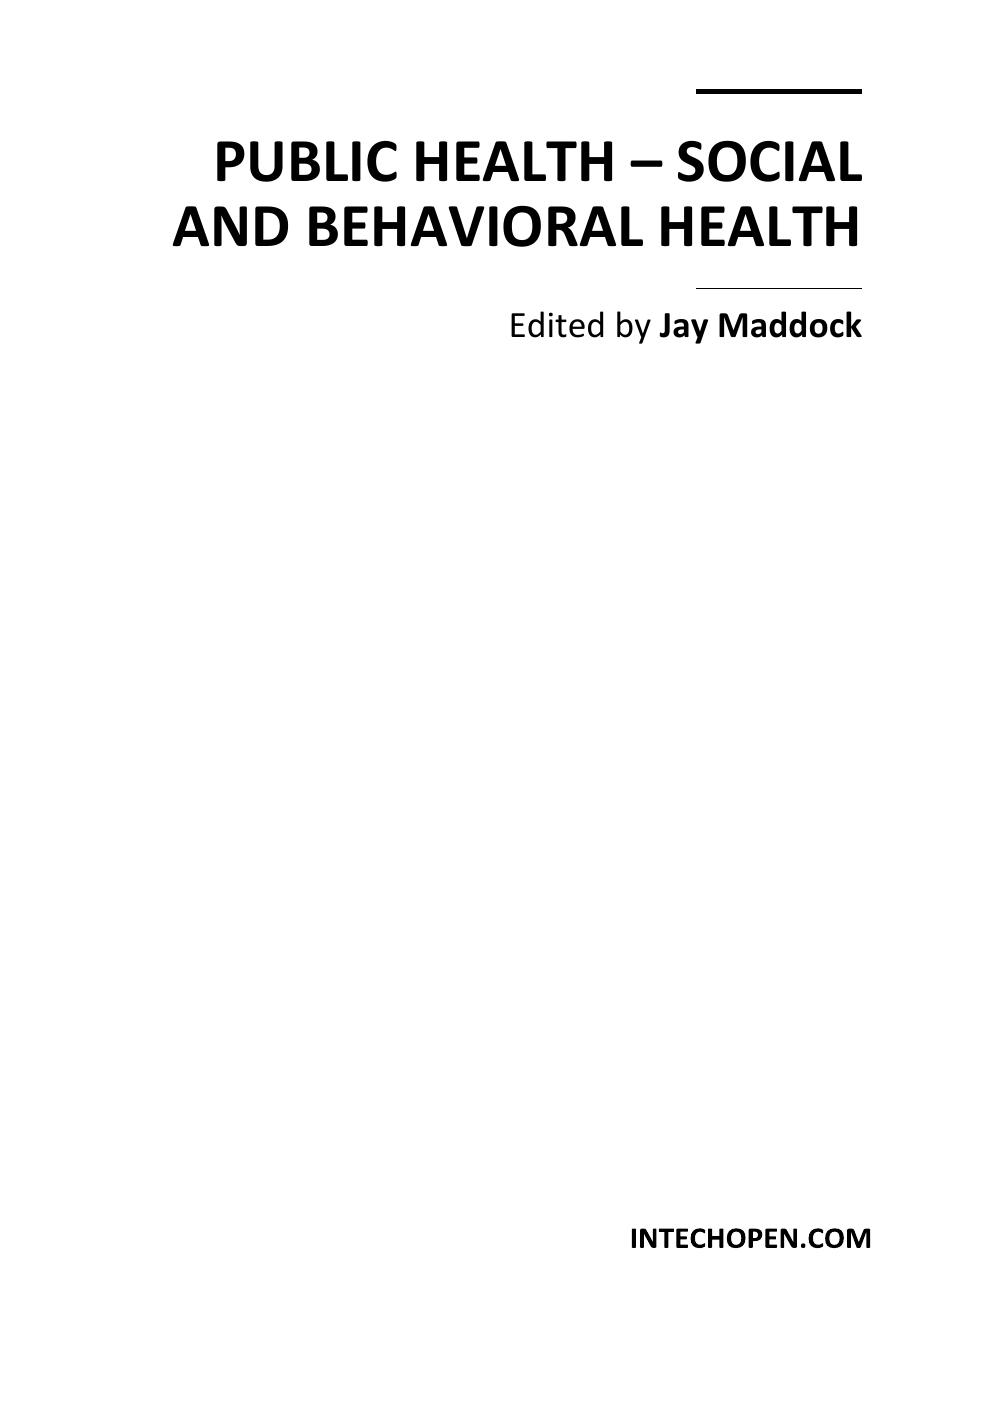 Public Health – Social and Behavioral Health